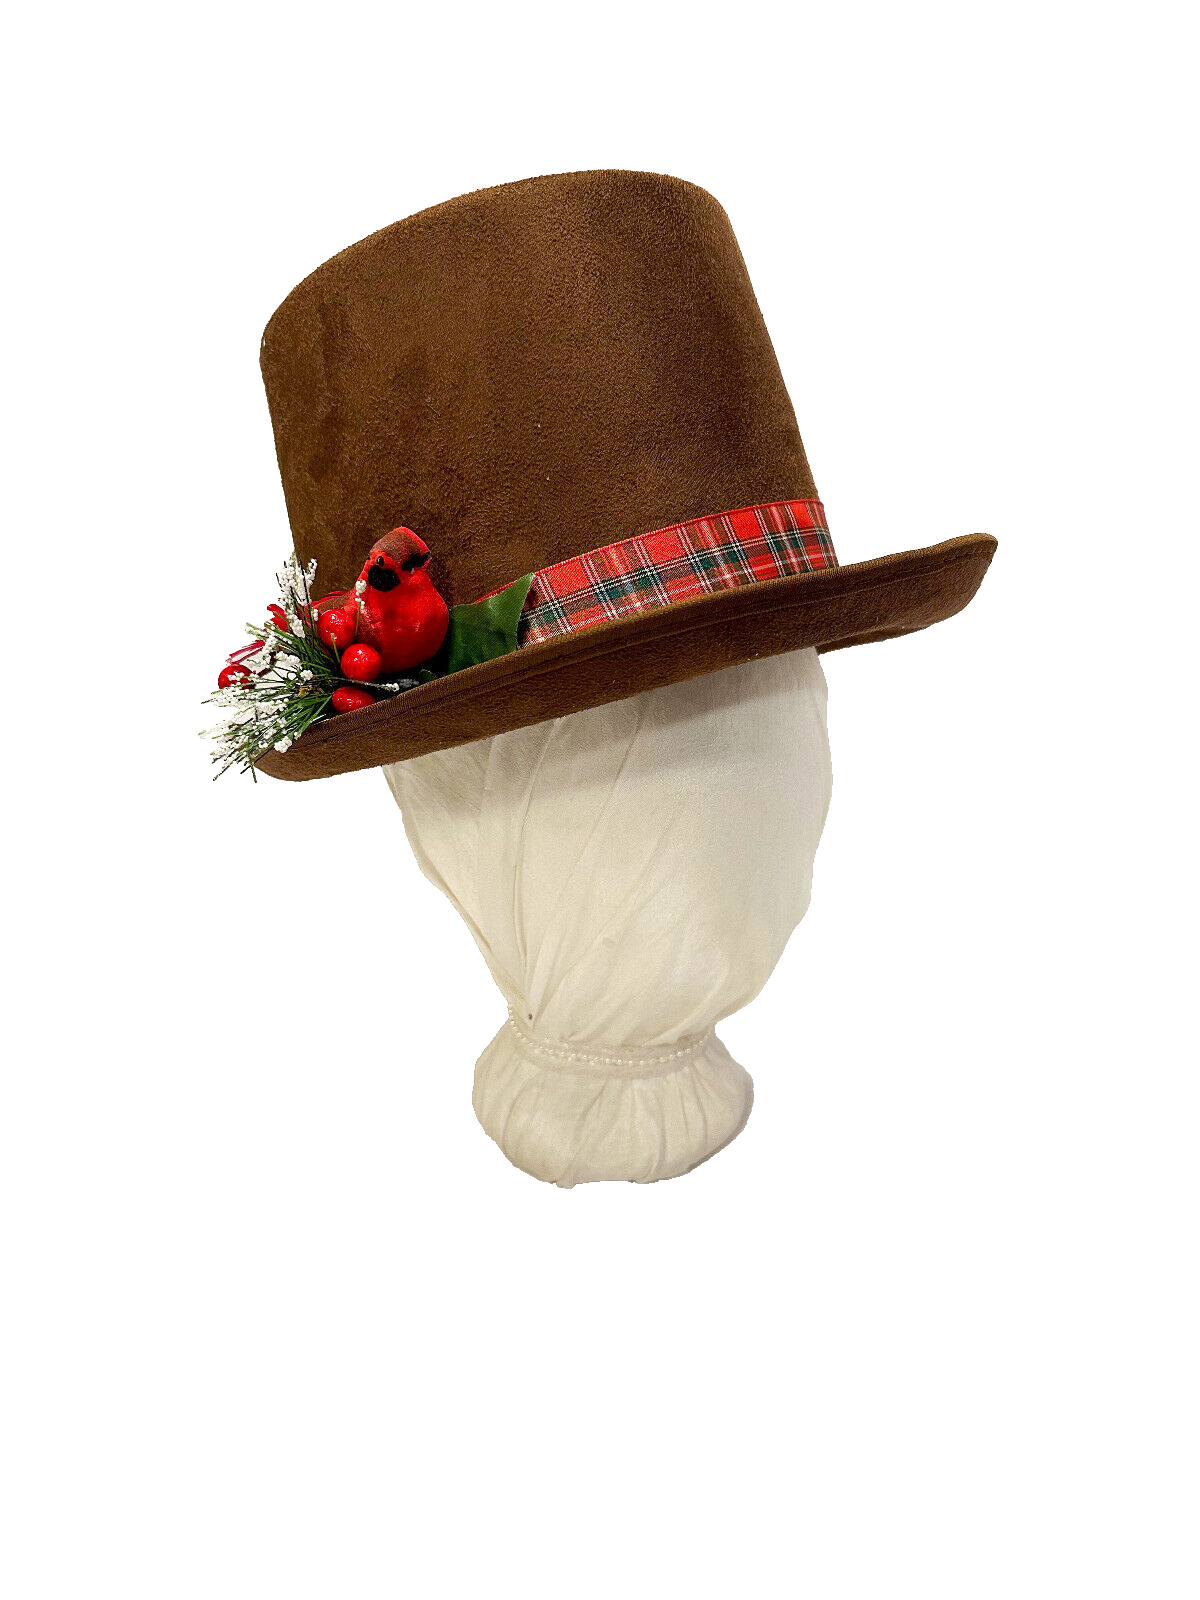 Austentation Regency/Victorian Caroler Top Hat: Brown w/ Plaid Ribbon, Cardinal